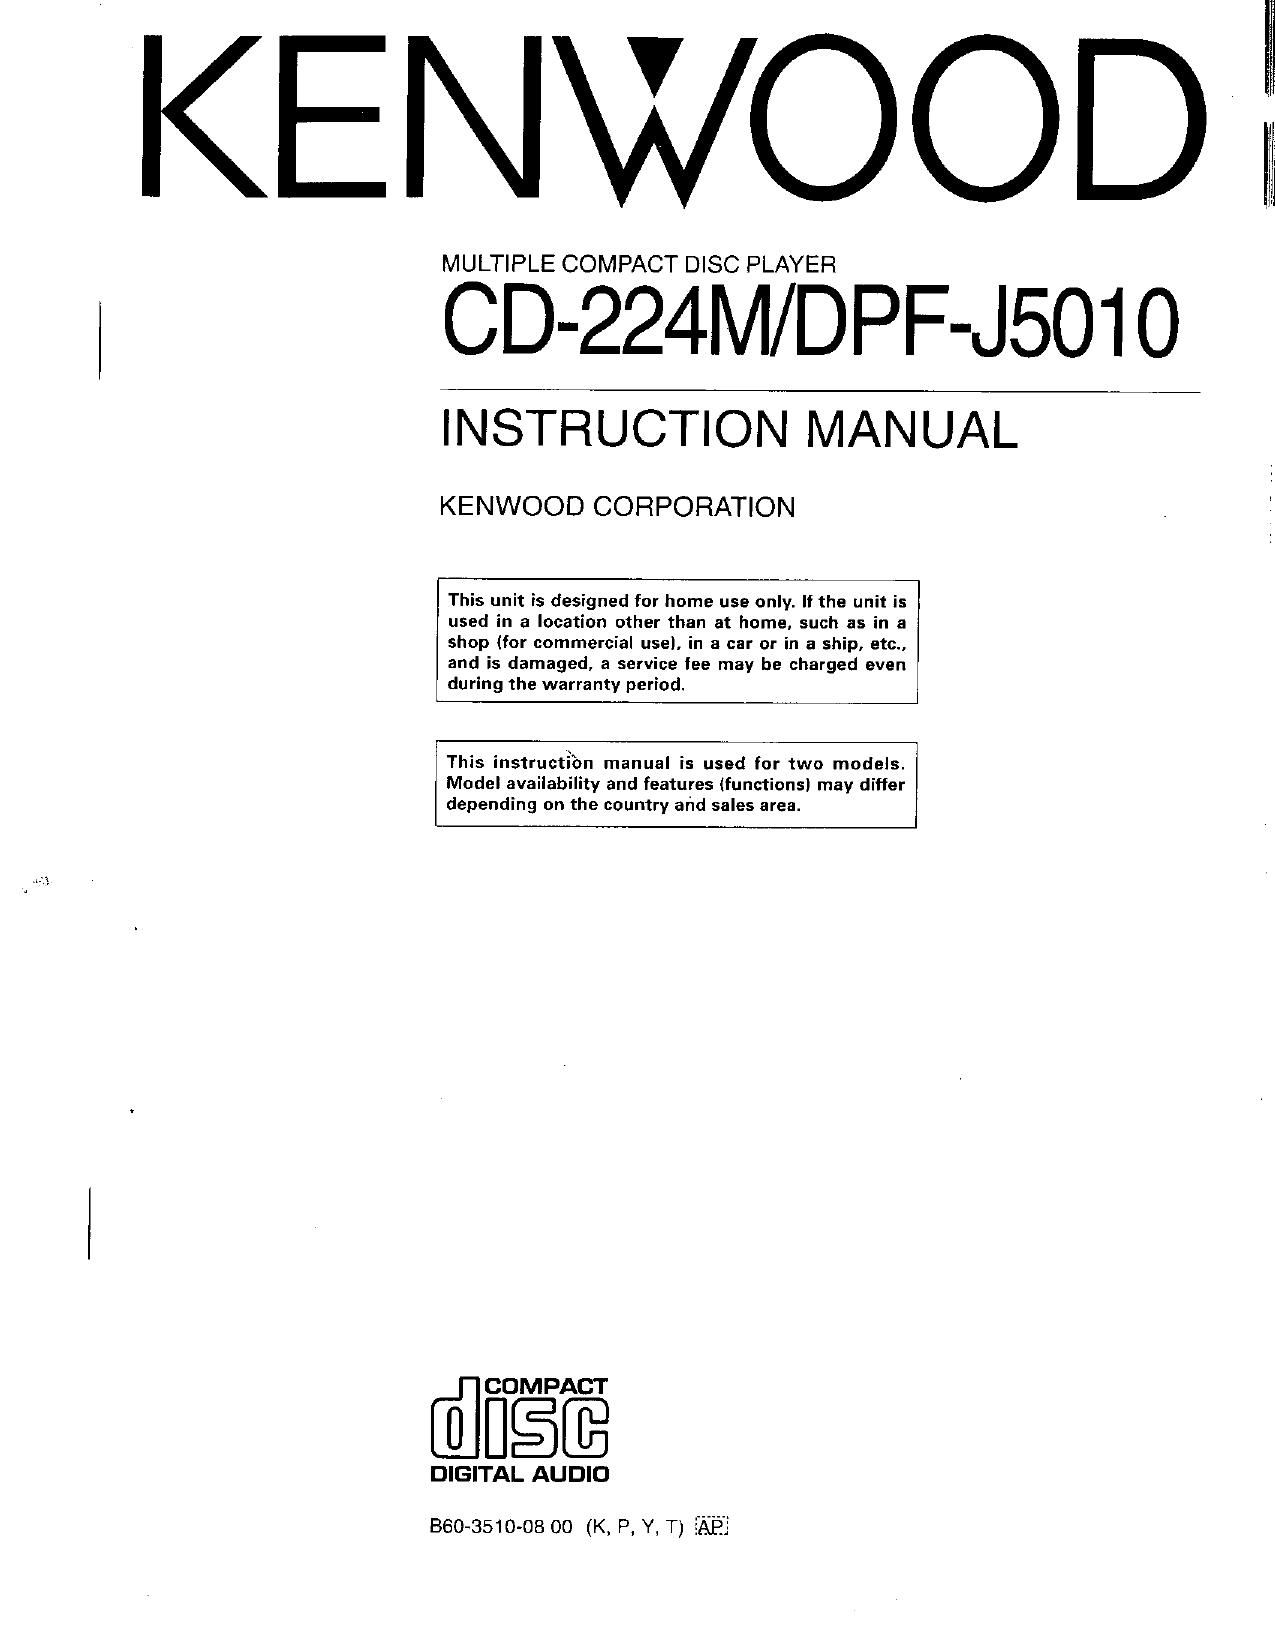 Kenwood CDDPFJ 5010 Owners Manual